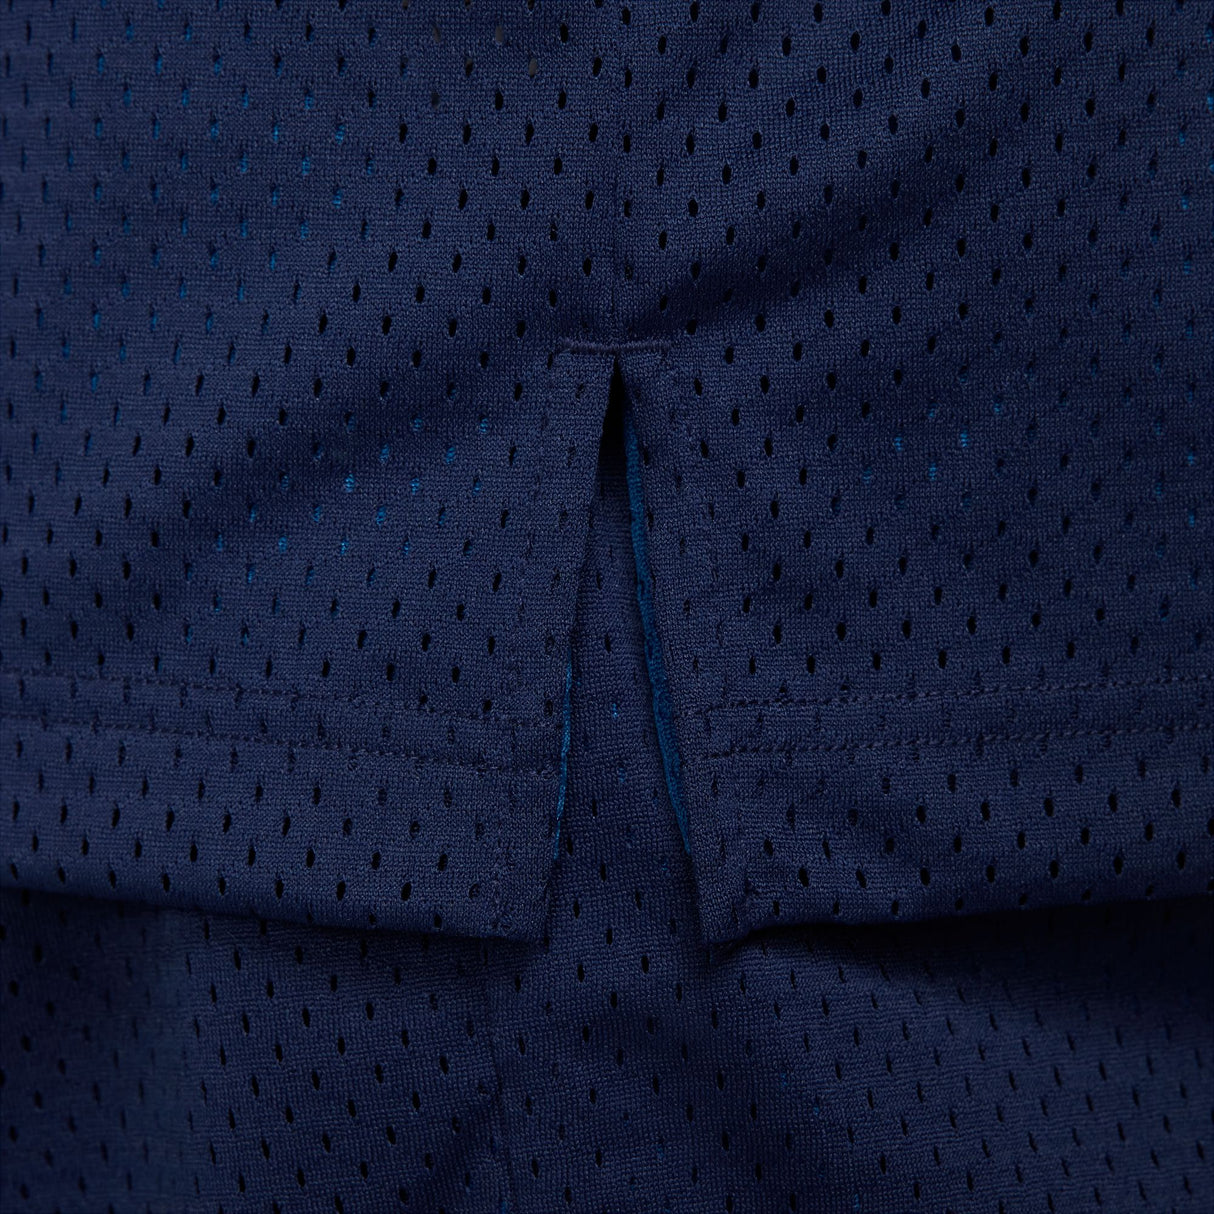 Nike SB Midnight Navy/Court Blue Reversible Basketball Jersey